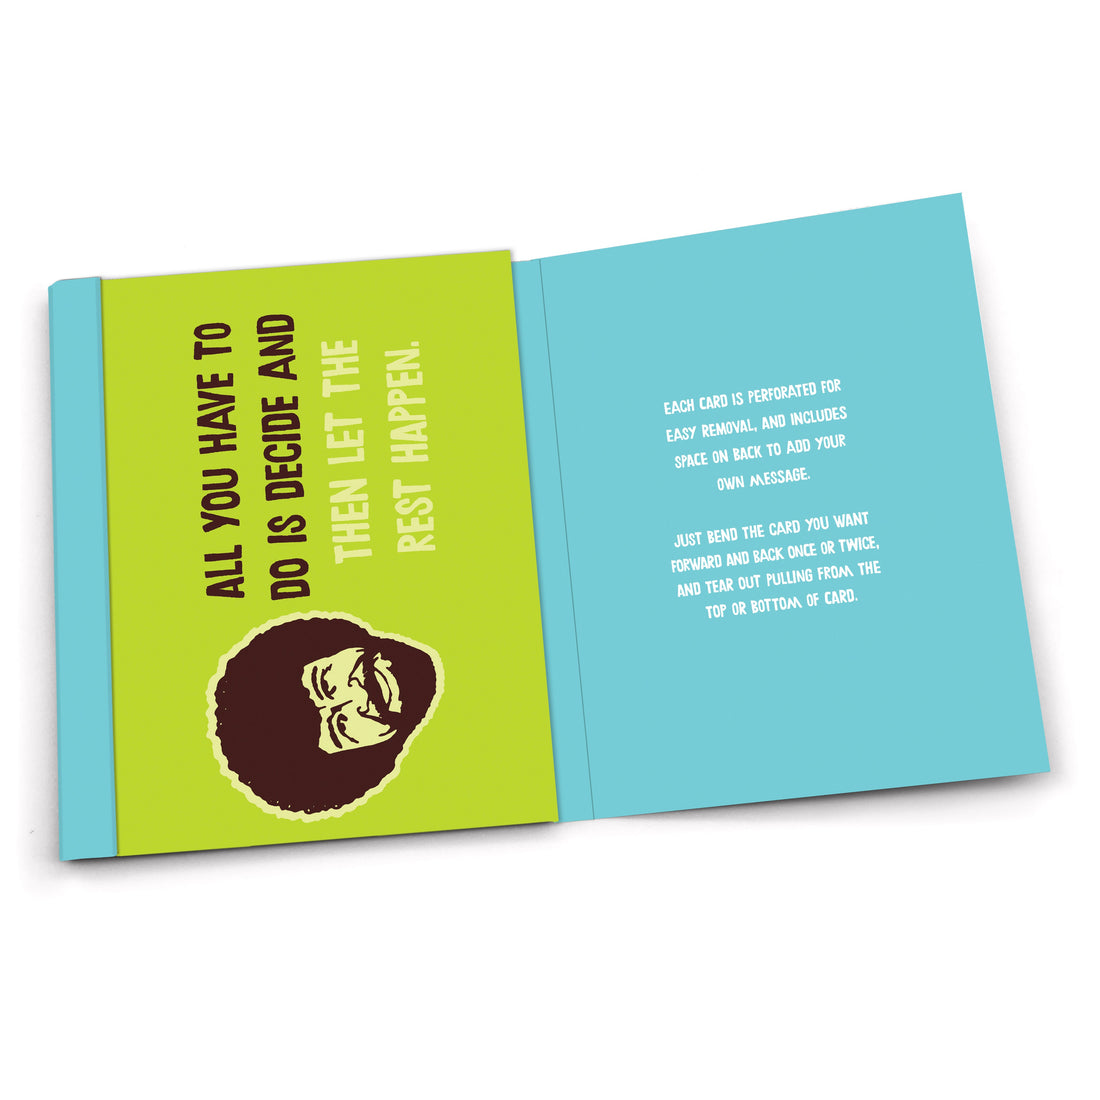 Bob Ross Jumbo Tear and Share Notes - Official Bob Ross Merchandise